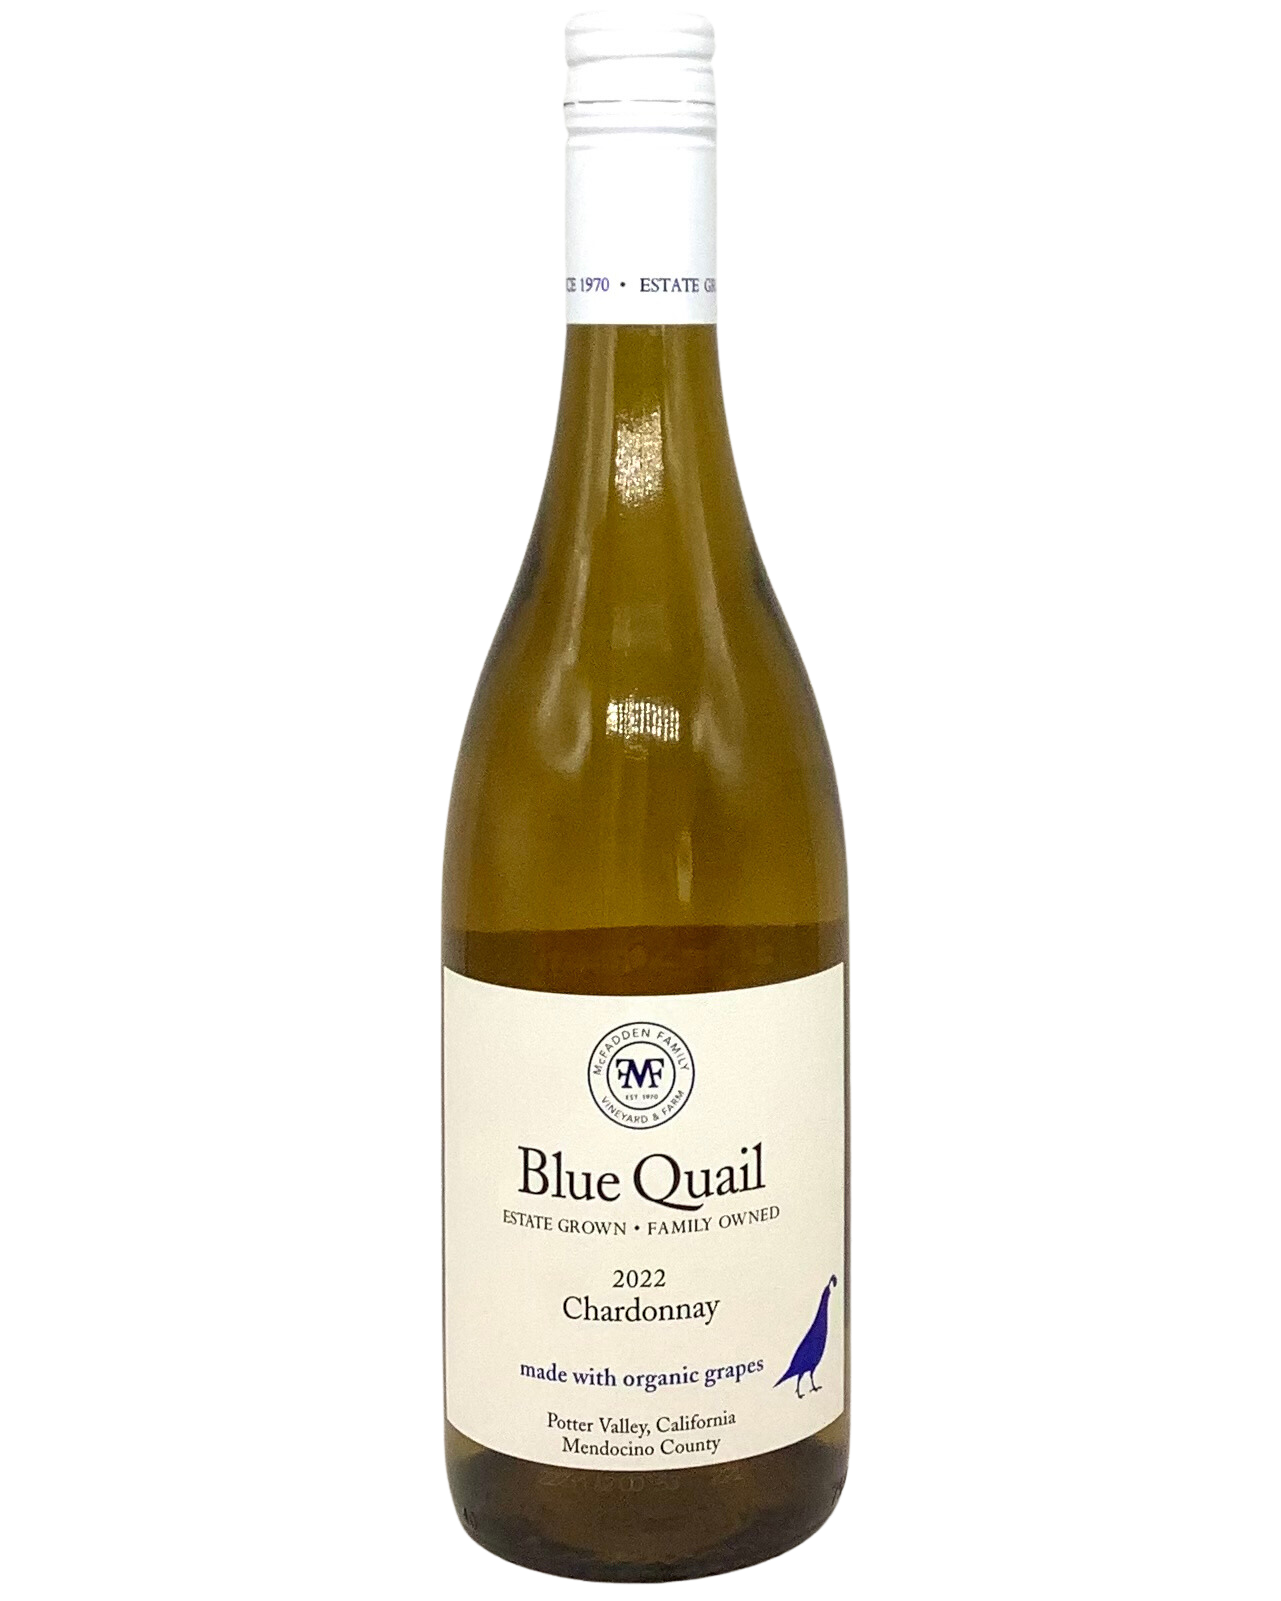 Blue Quail, Chardonnay, Mendocino County, California 2022 organic